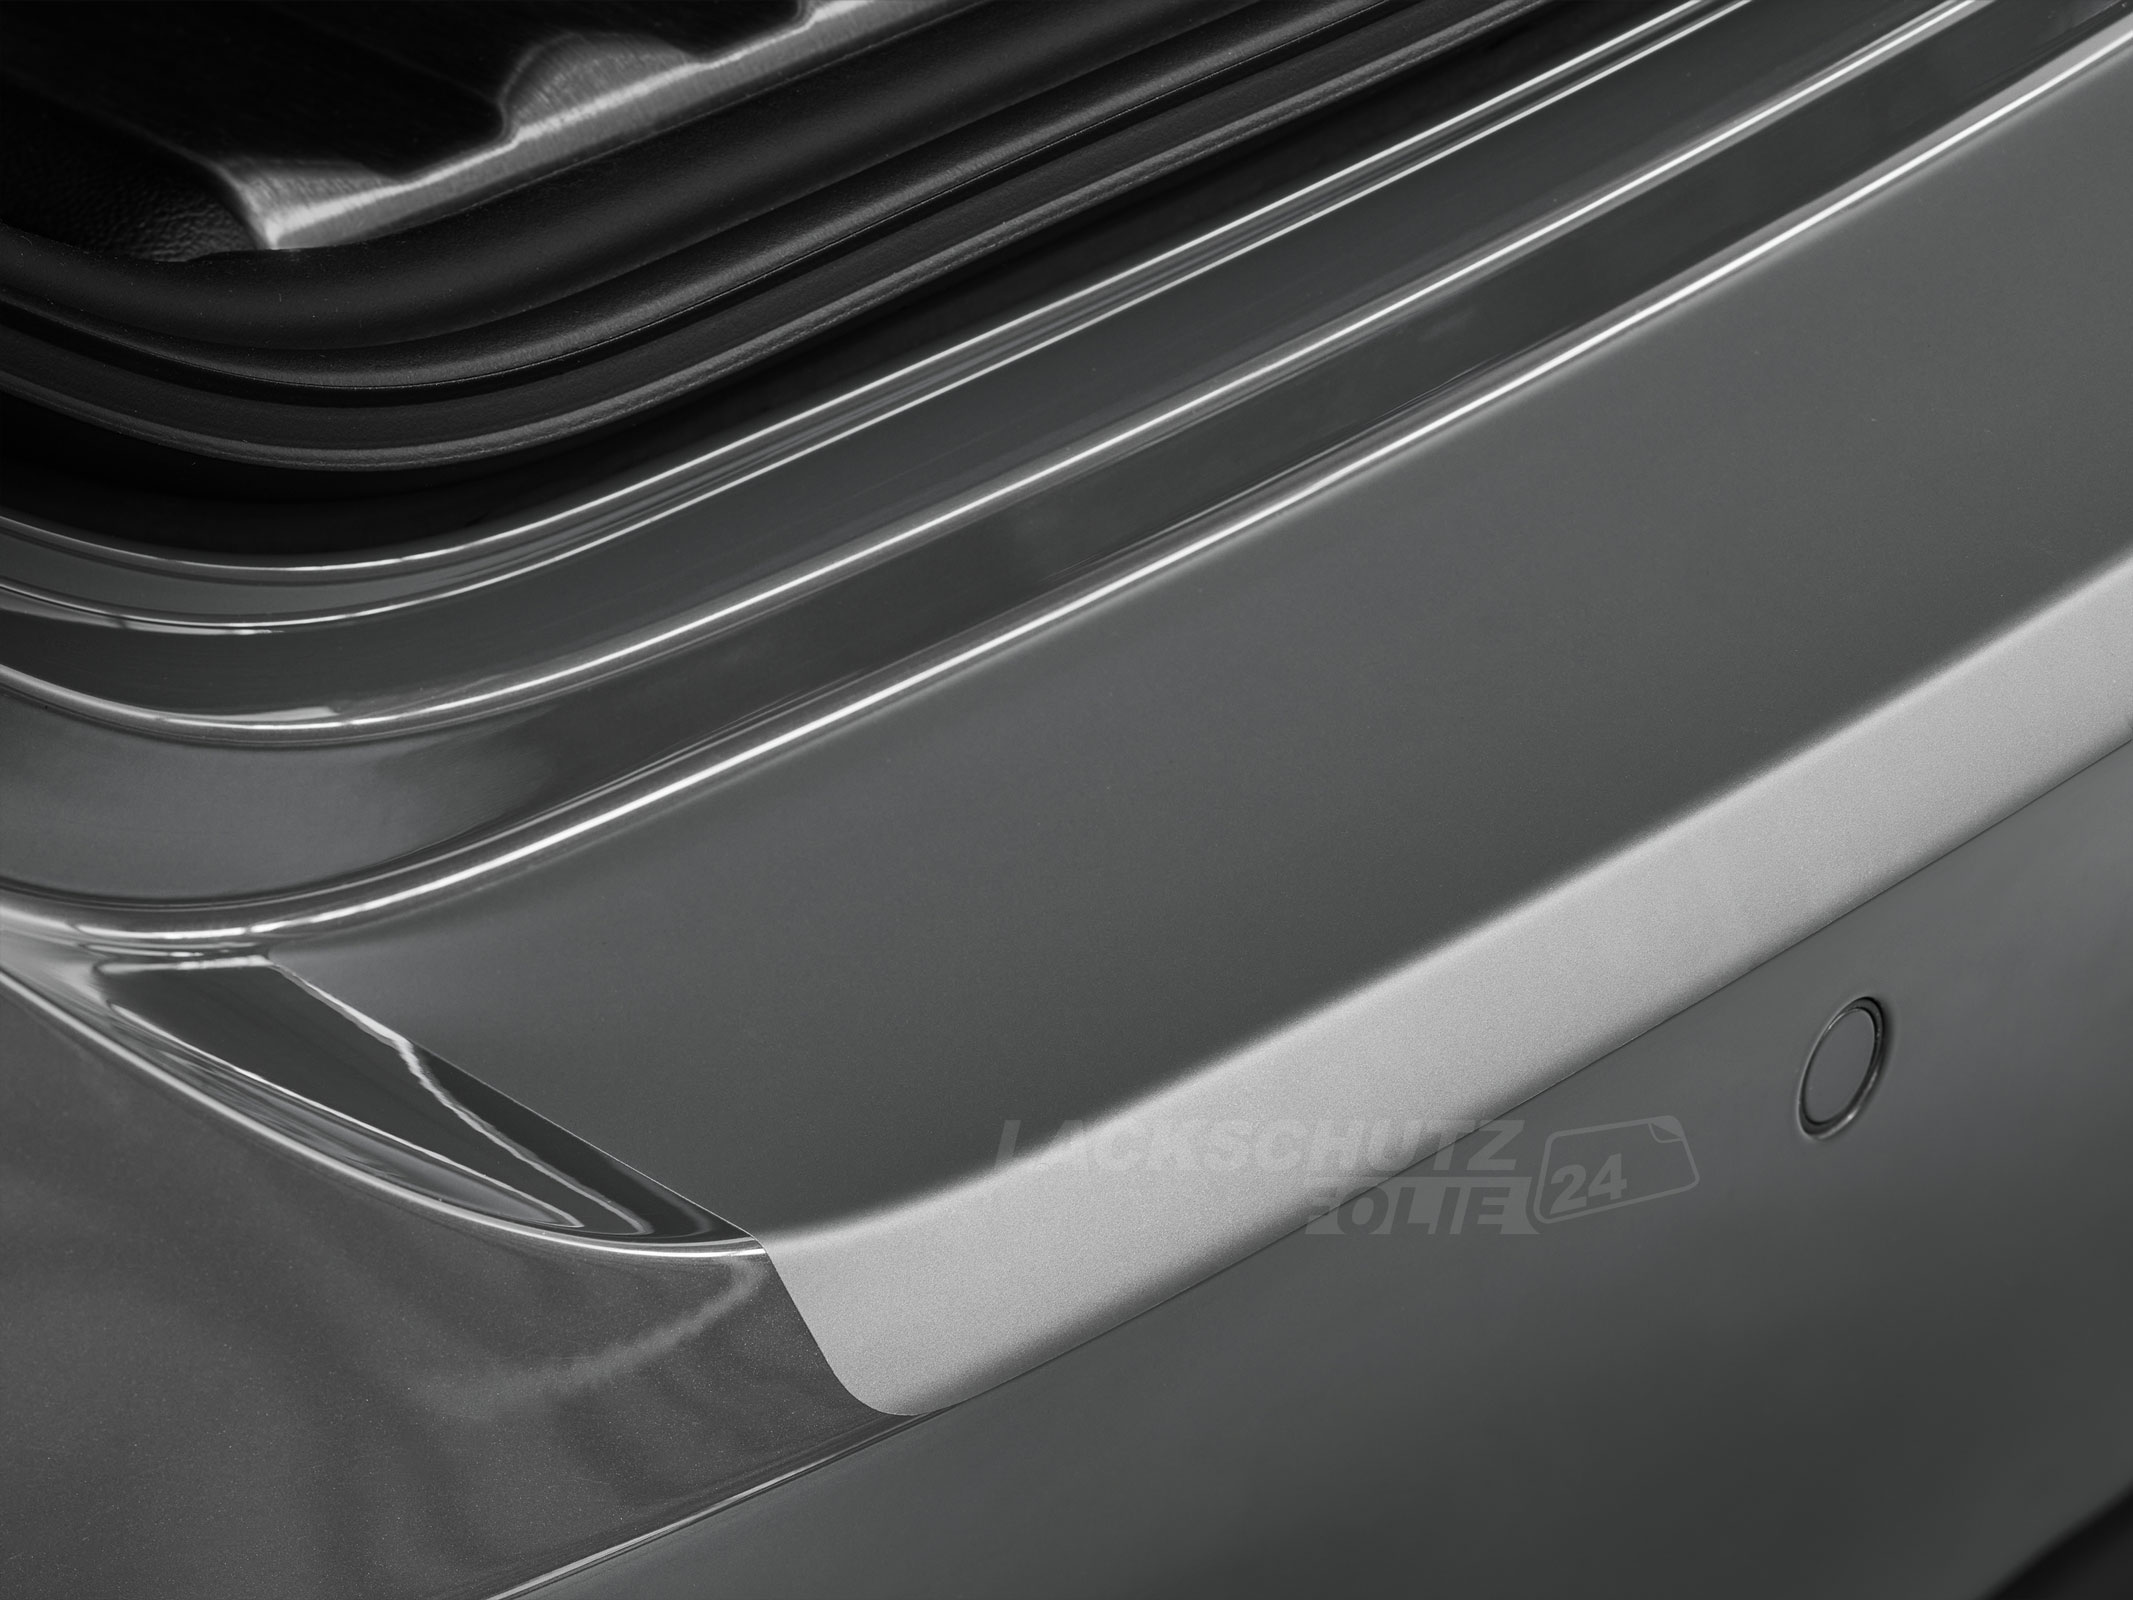 Ladekantenschutzfolie - Transparent Glatt MATT 110 µm stark  für BMW 1er  Typ F20 / F21, Facelift, BJ 02/2015-08/2019